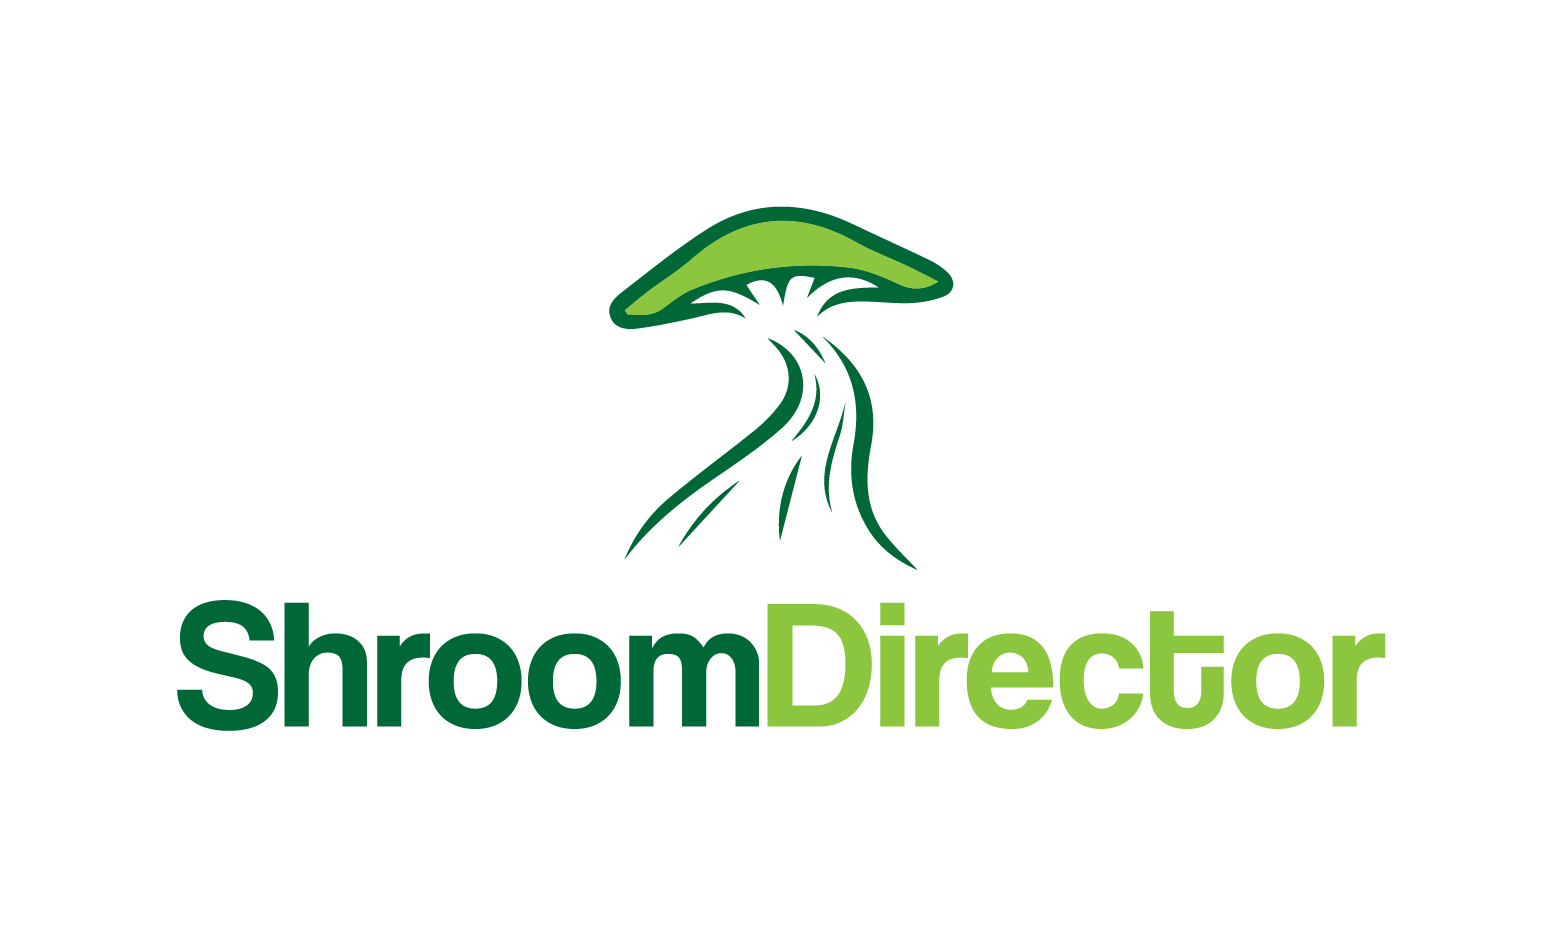 ShroomDirector.com - Creative brandable domain for sale